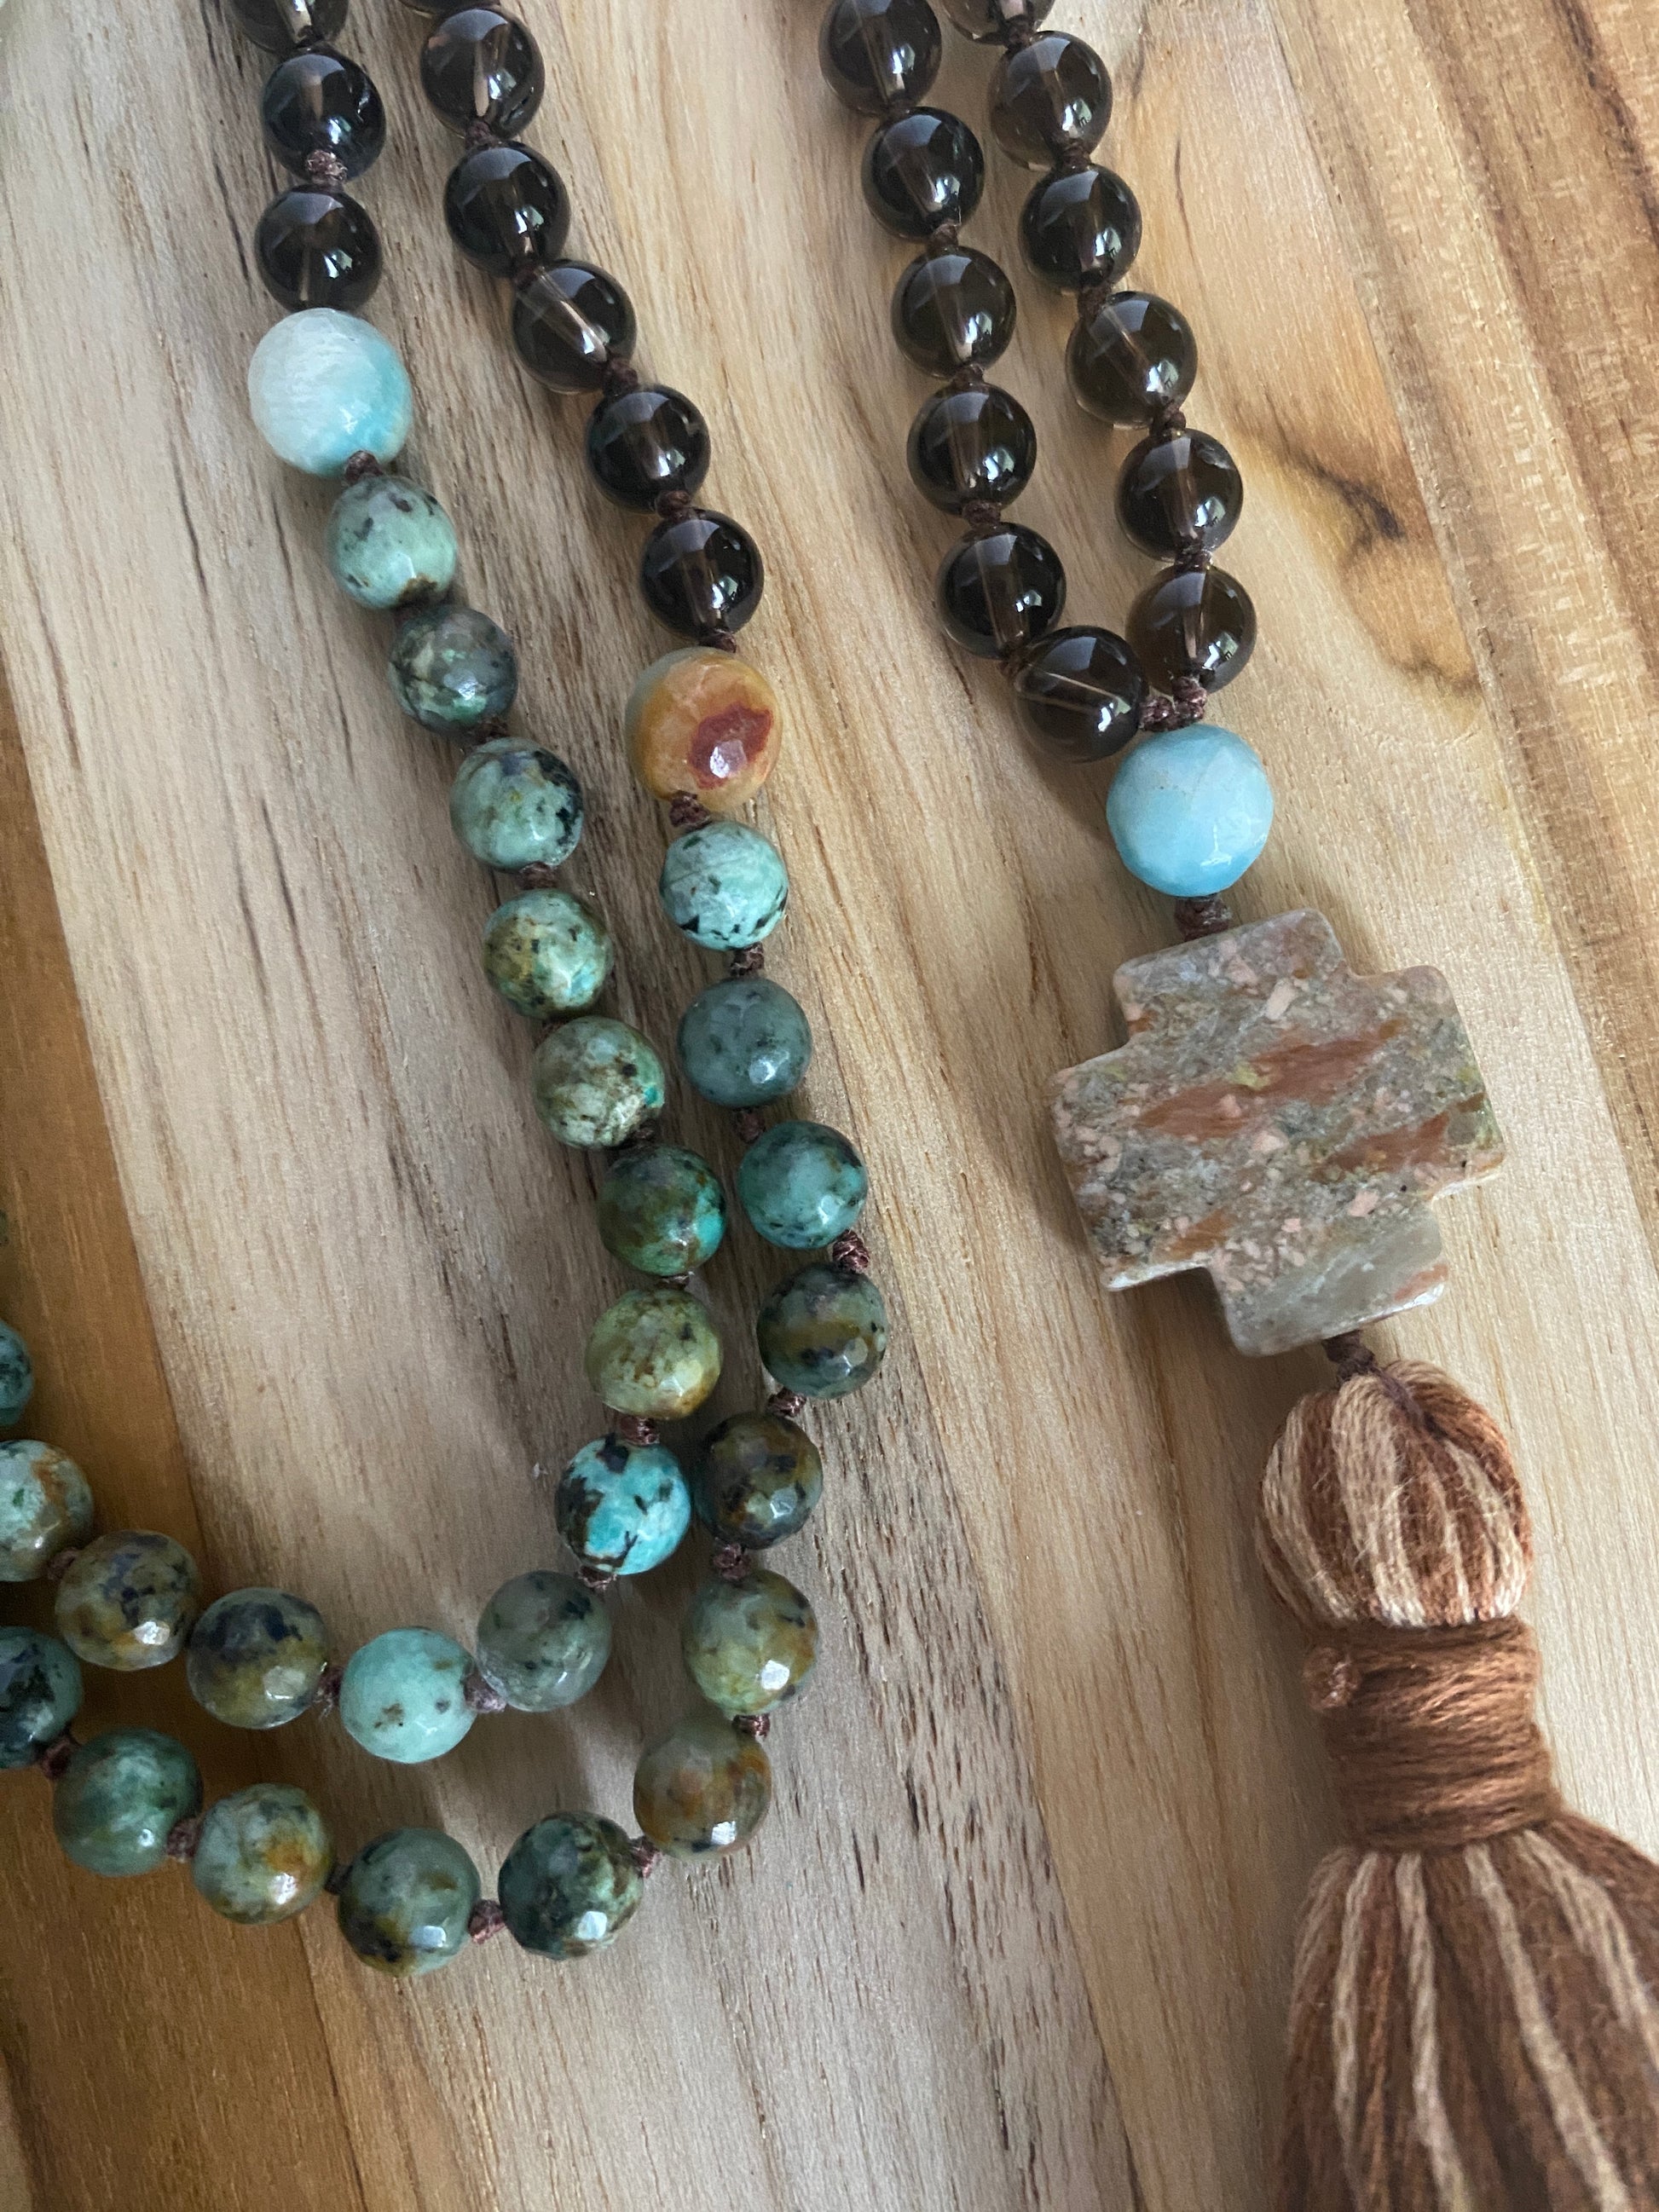 34" Long Smoky Quartz, African Turquoise & Amazonite 108 Bead Mala Prayer Tassel Necklace - My Urban Gems